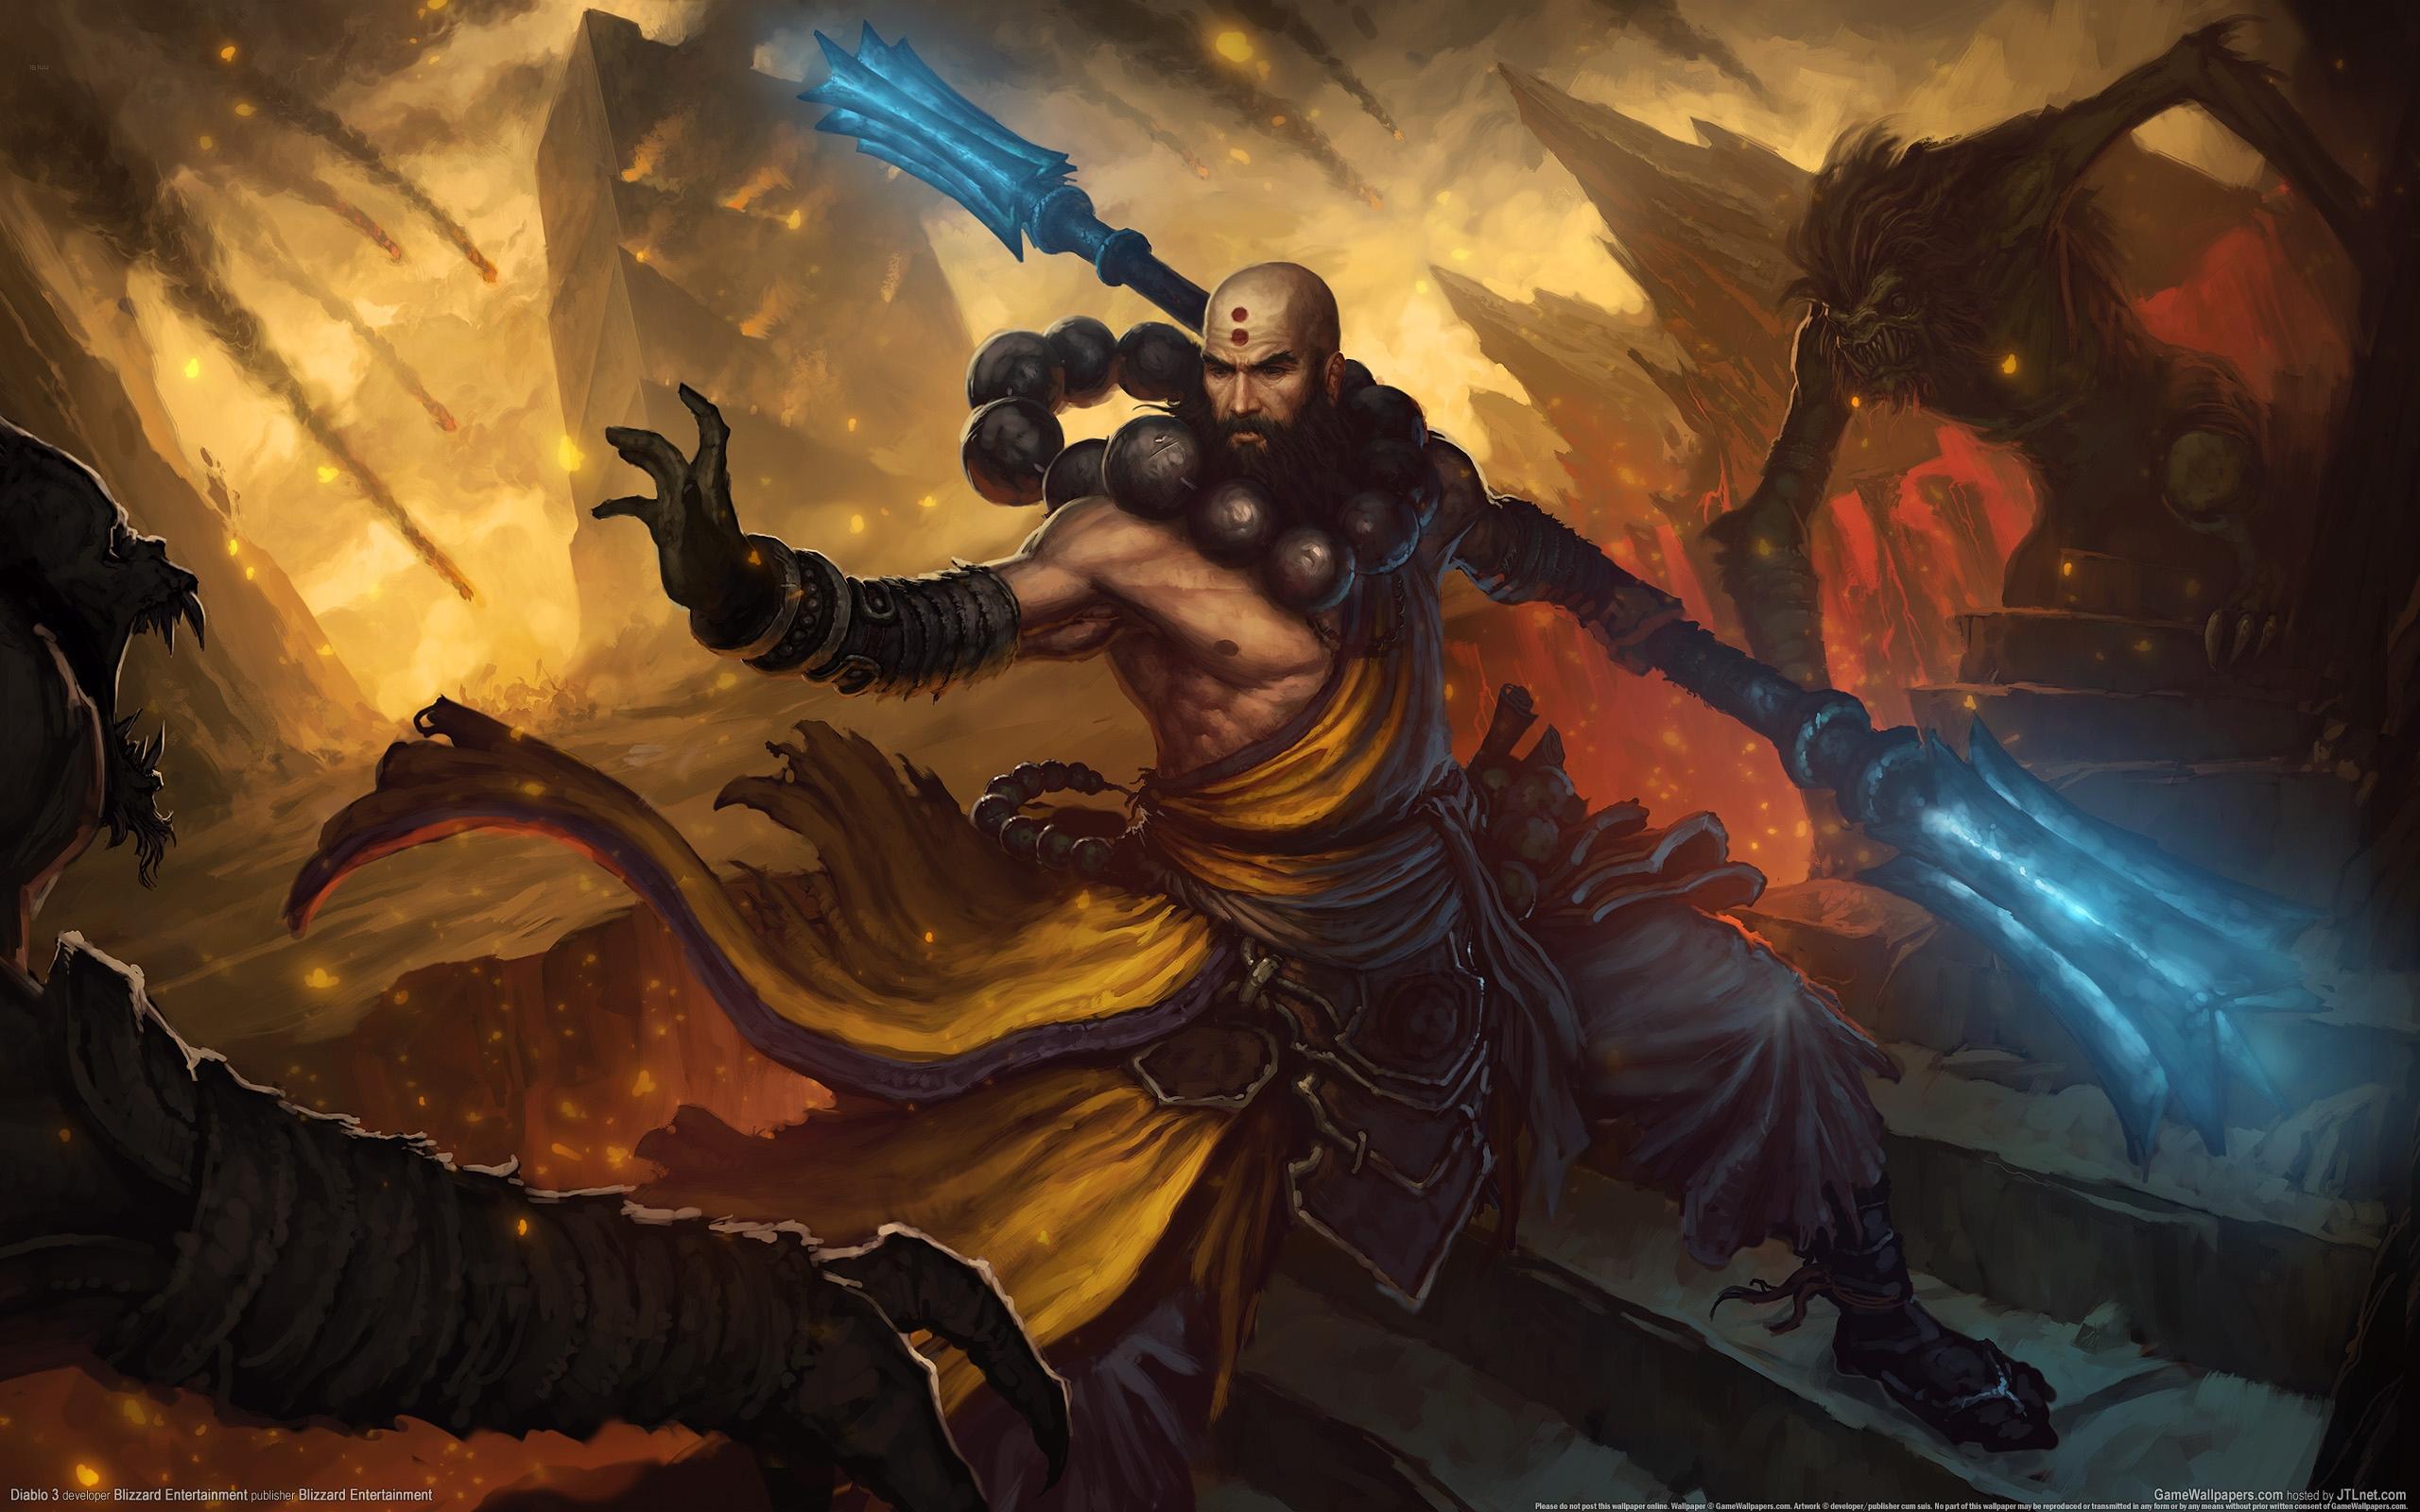 Diablo III Monk character showcasing intense combat skills.